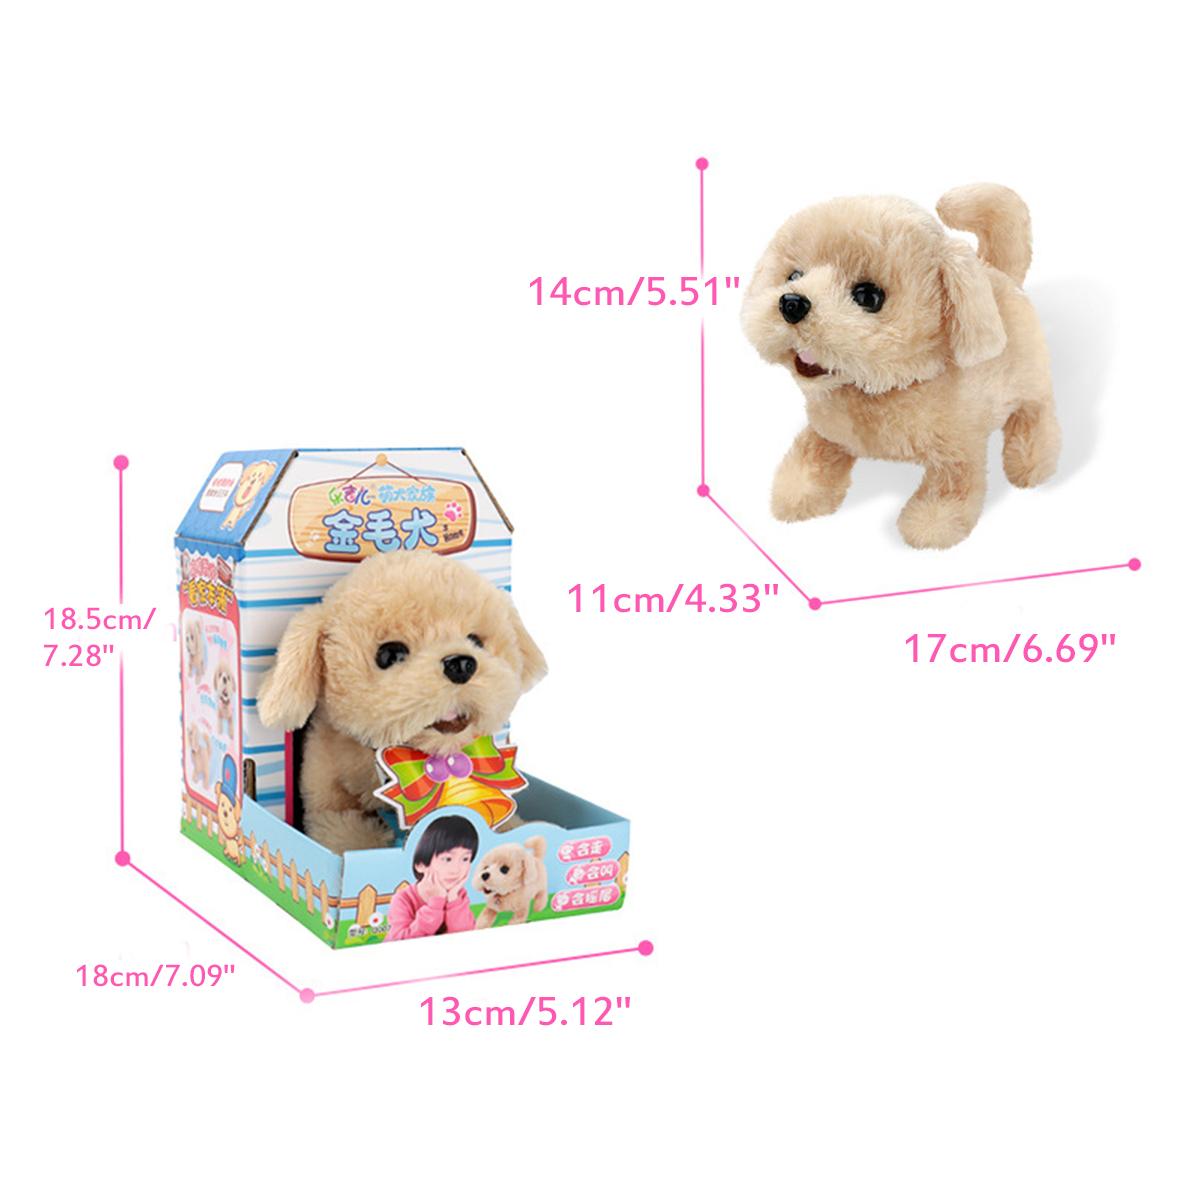 Cute-Electronic-Plush-Stuffed-Walking-Tail-Shaking-Barking-Pet-Dog-Toy-for-Kids-Developmental-1707046-10